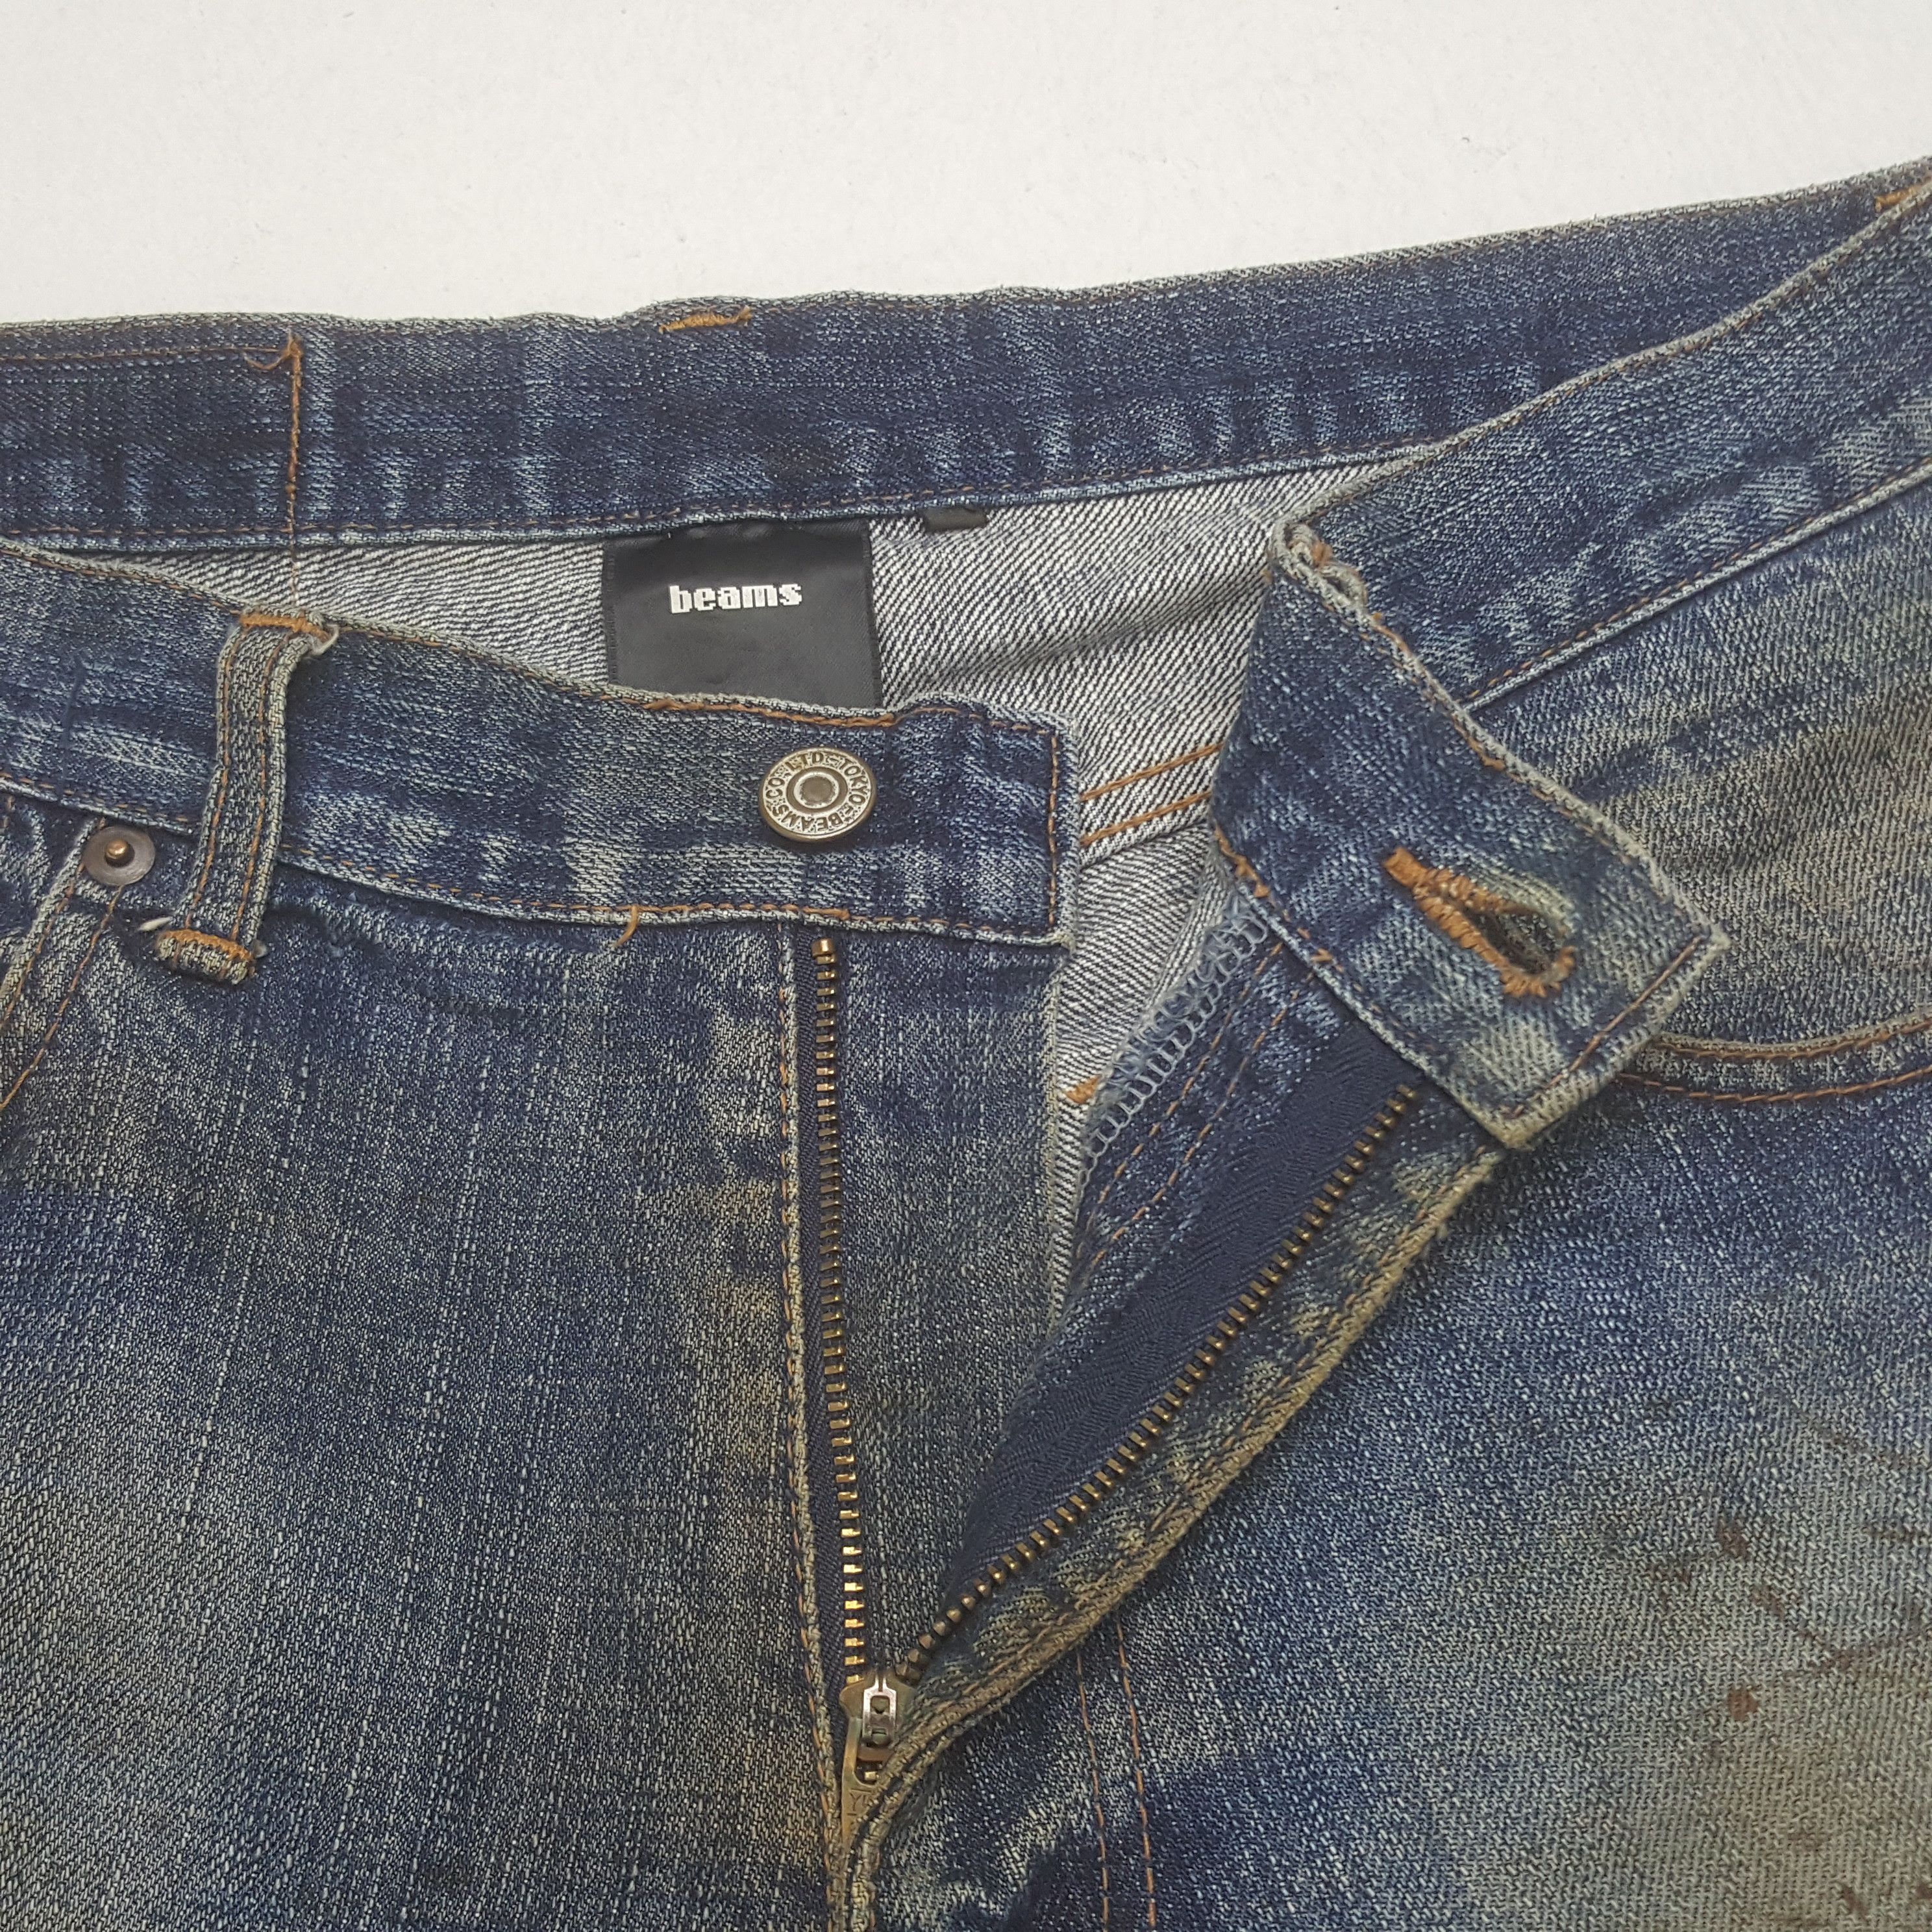 Vintage Vintage Beams Japanese Brand Distressed Shorts Denim Jeans Size US 32 / EU 48 - 6 Thumbnail